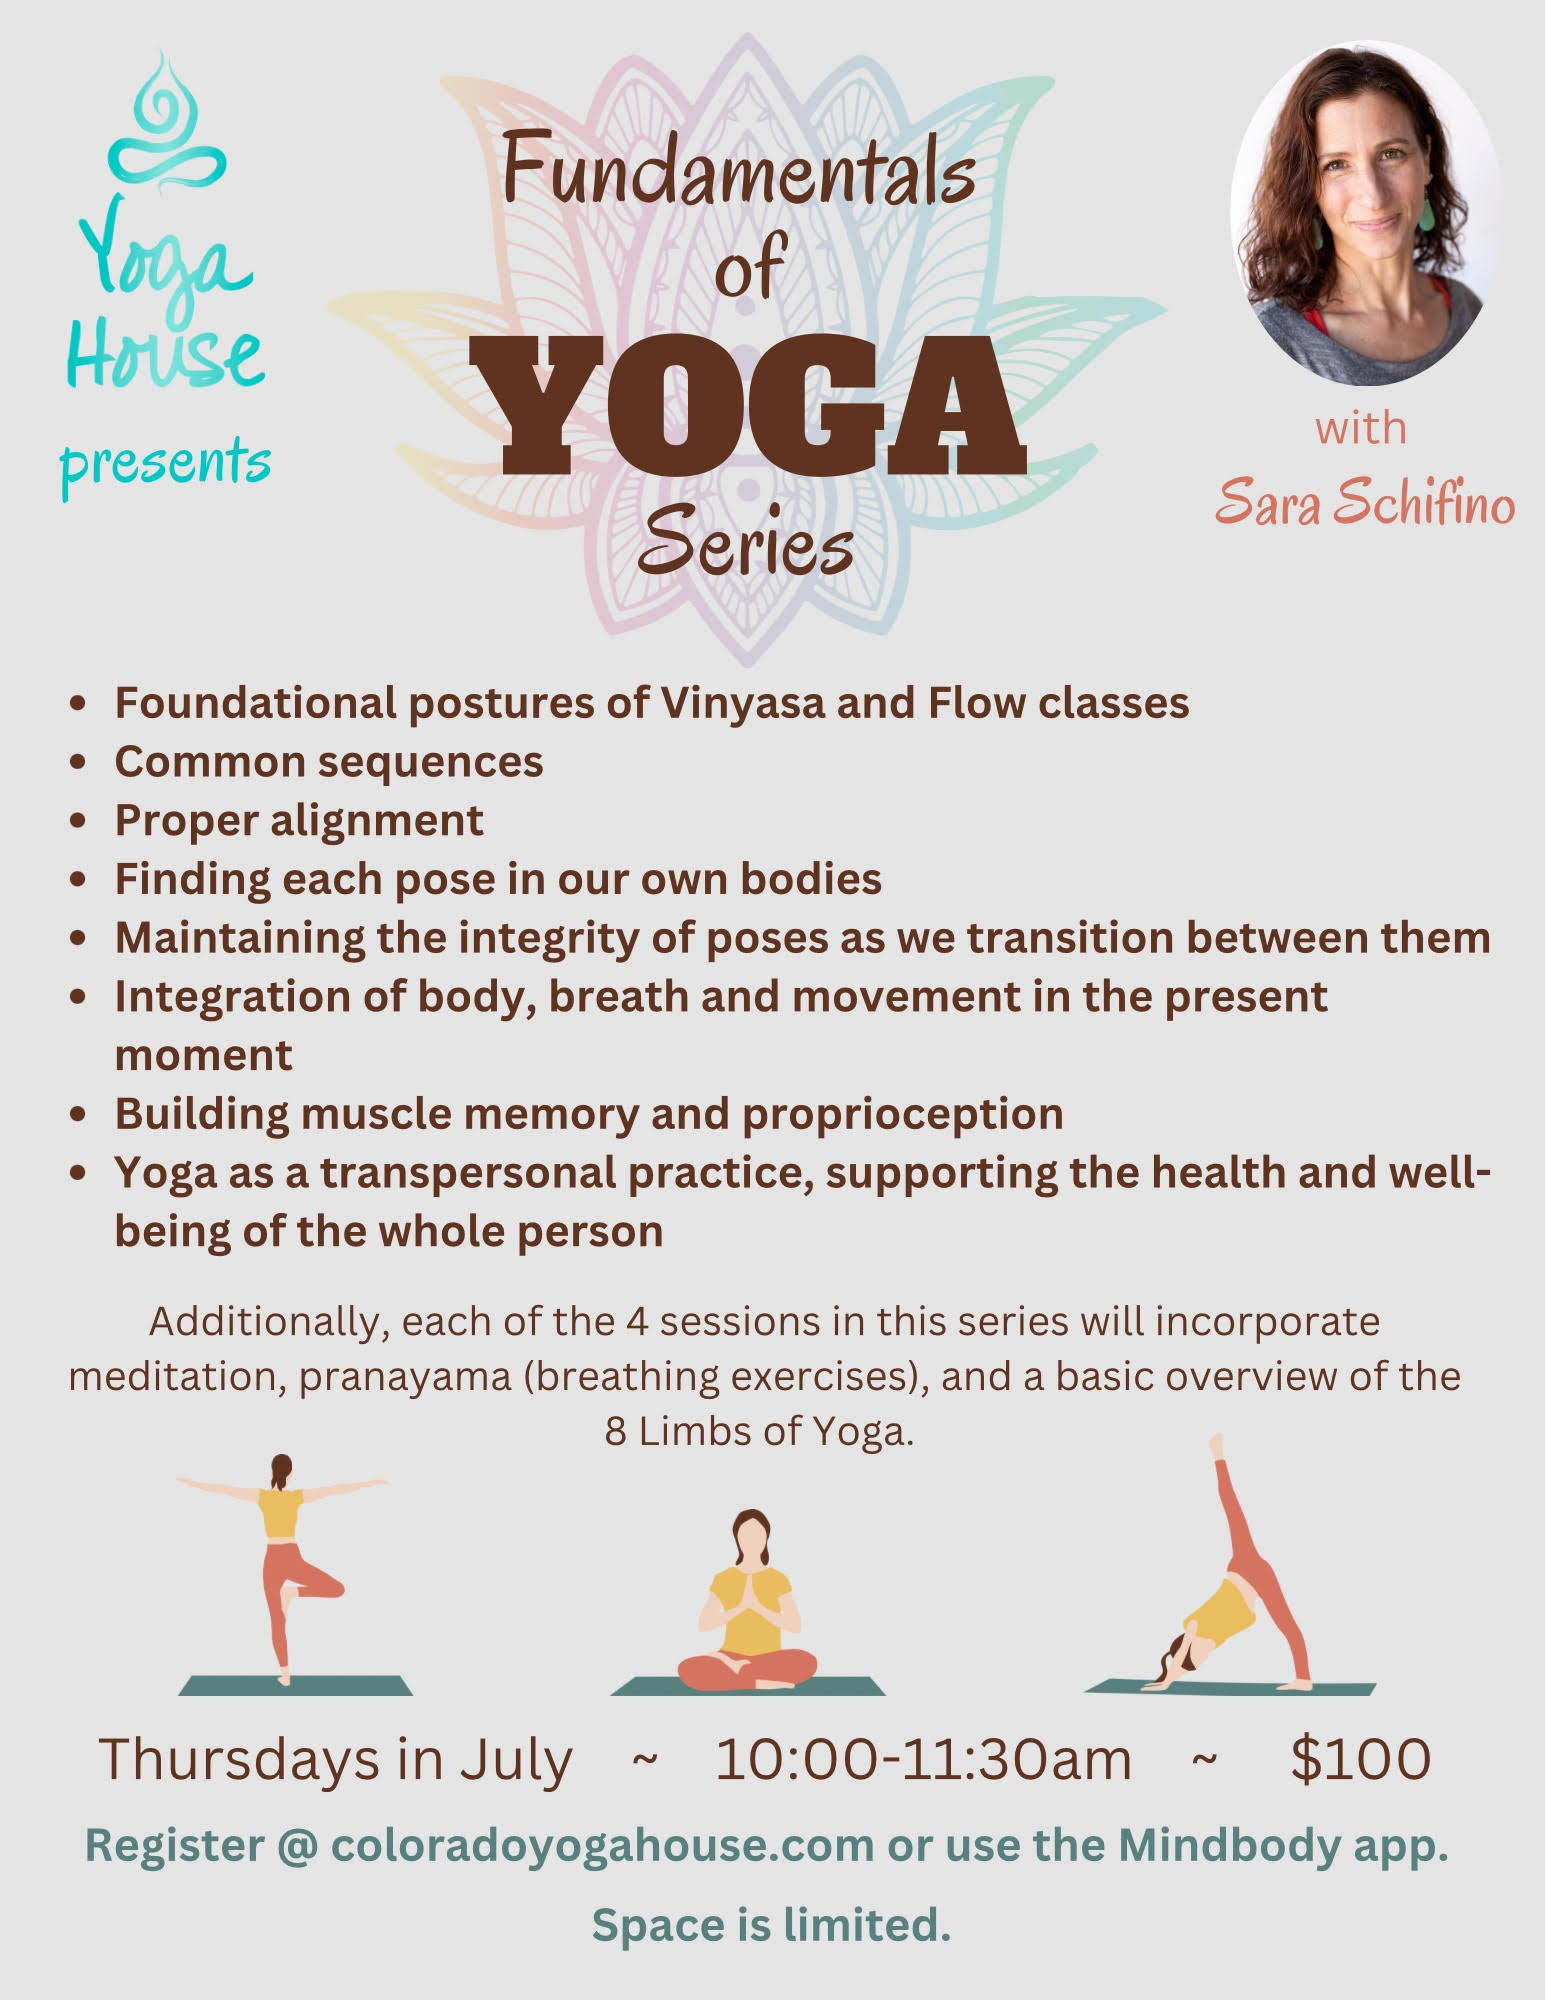 Fundamentals of Yoga Series starting July 6th! - Yoga House